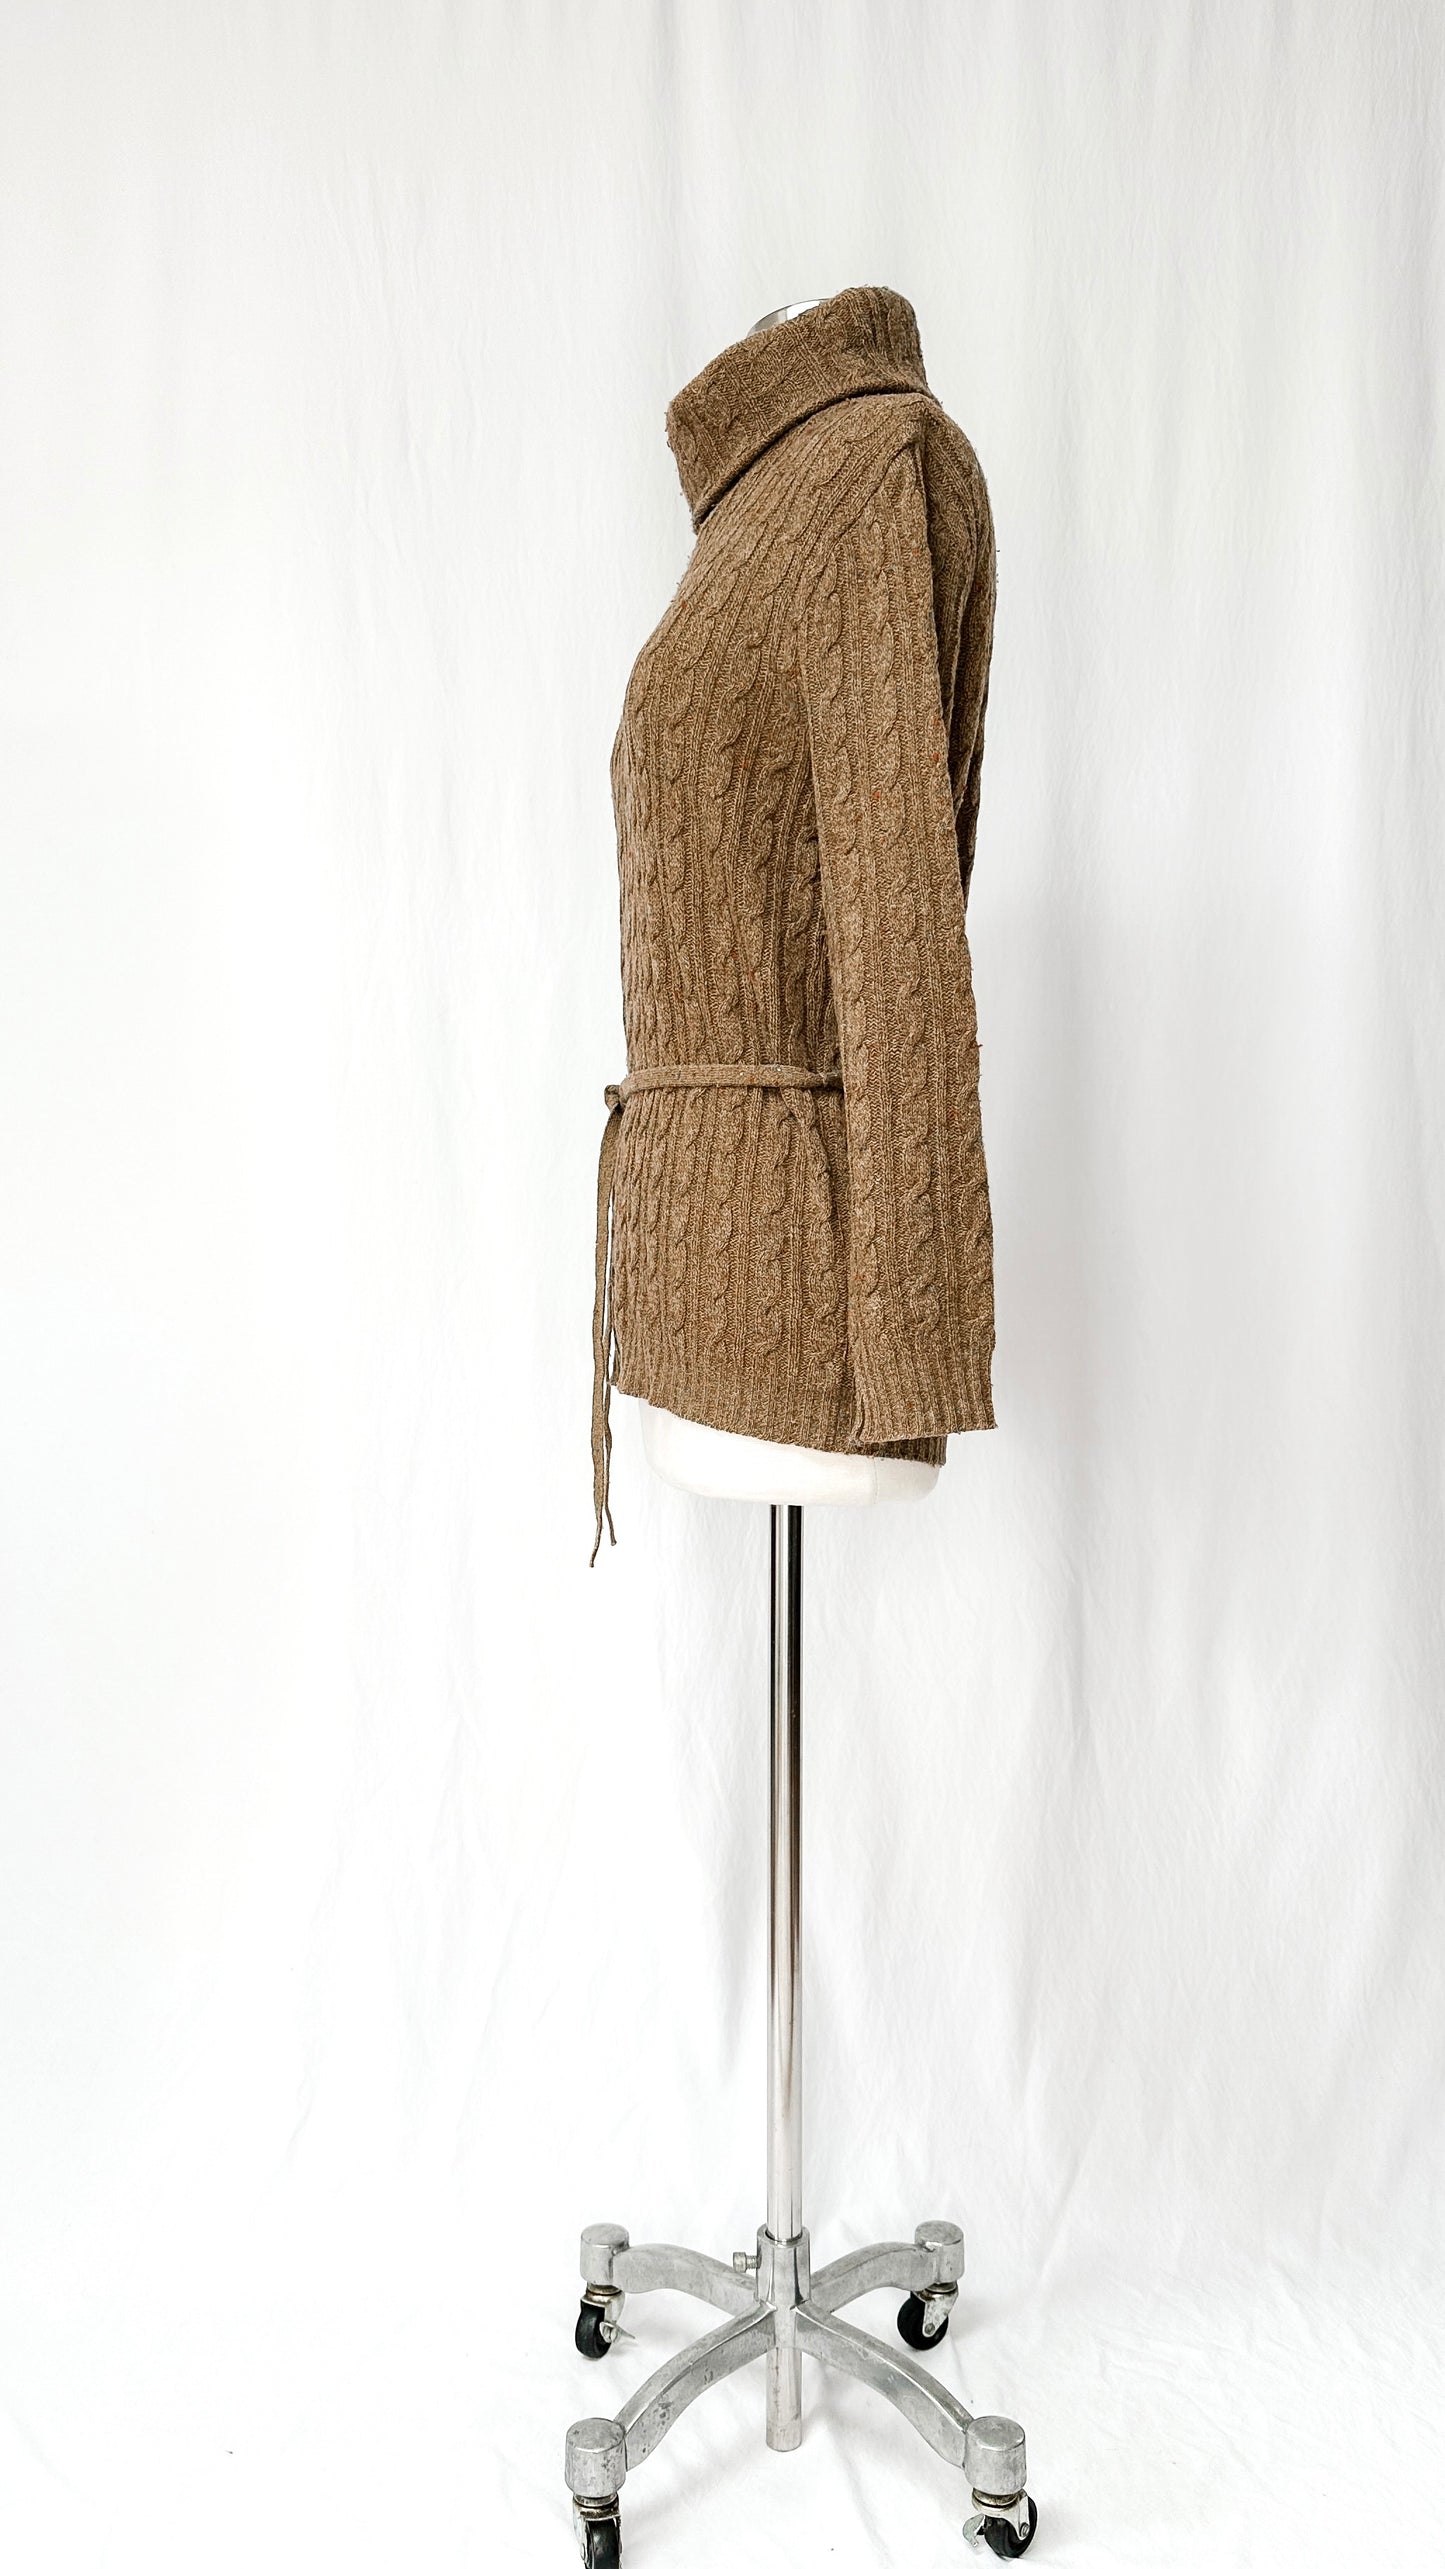 Vintage 70’s Jaeger Brown Lambswool Knit Belted Top (M)